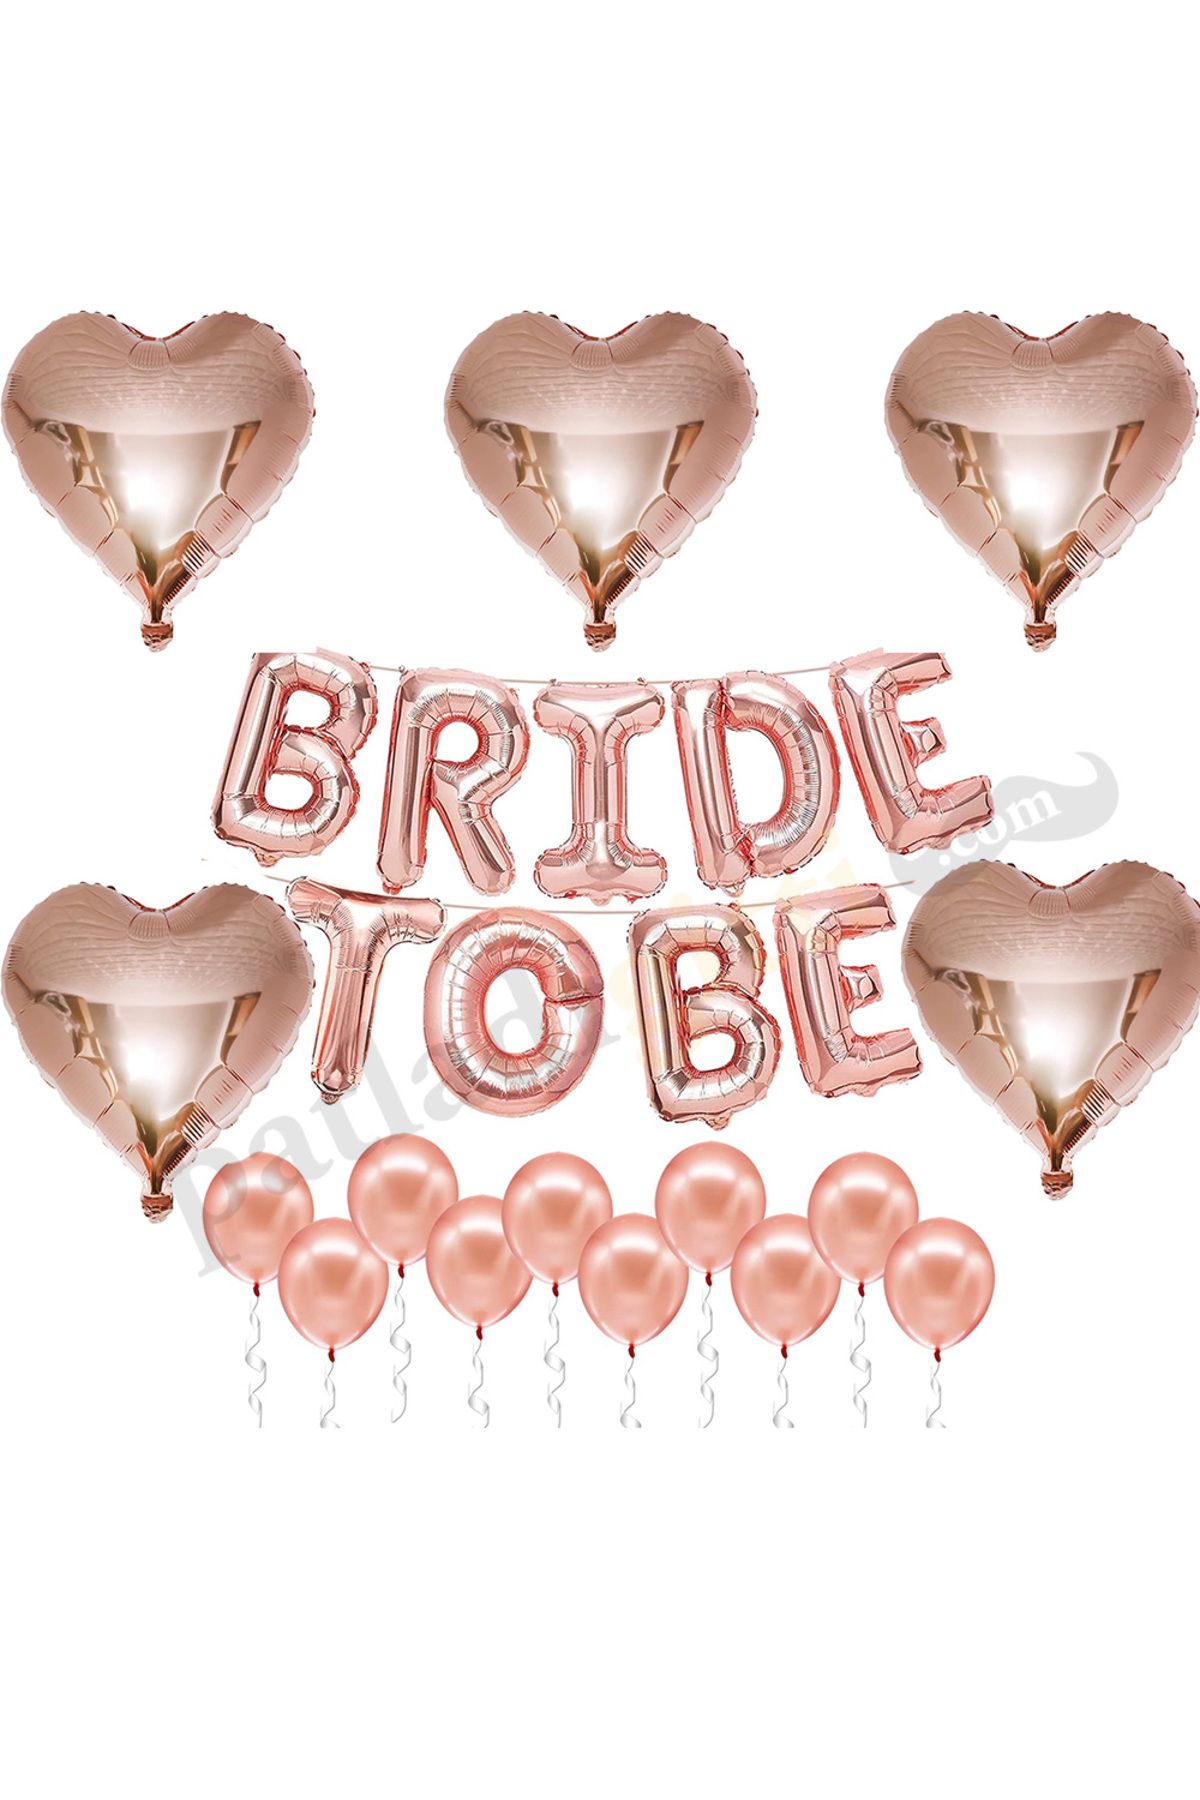 Patladı Gitti Bride To Be Rose Gold Folyo Balon Seti, 5 Adet Kalp Folyo Ve Lateks Balon